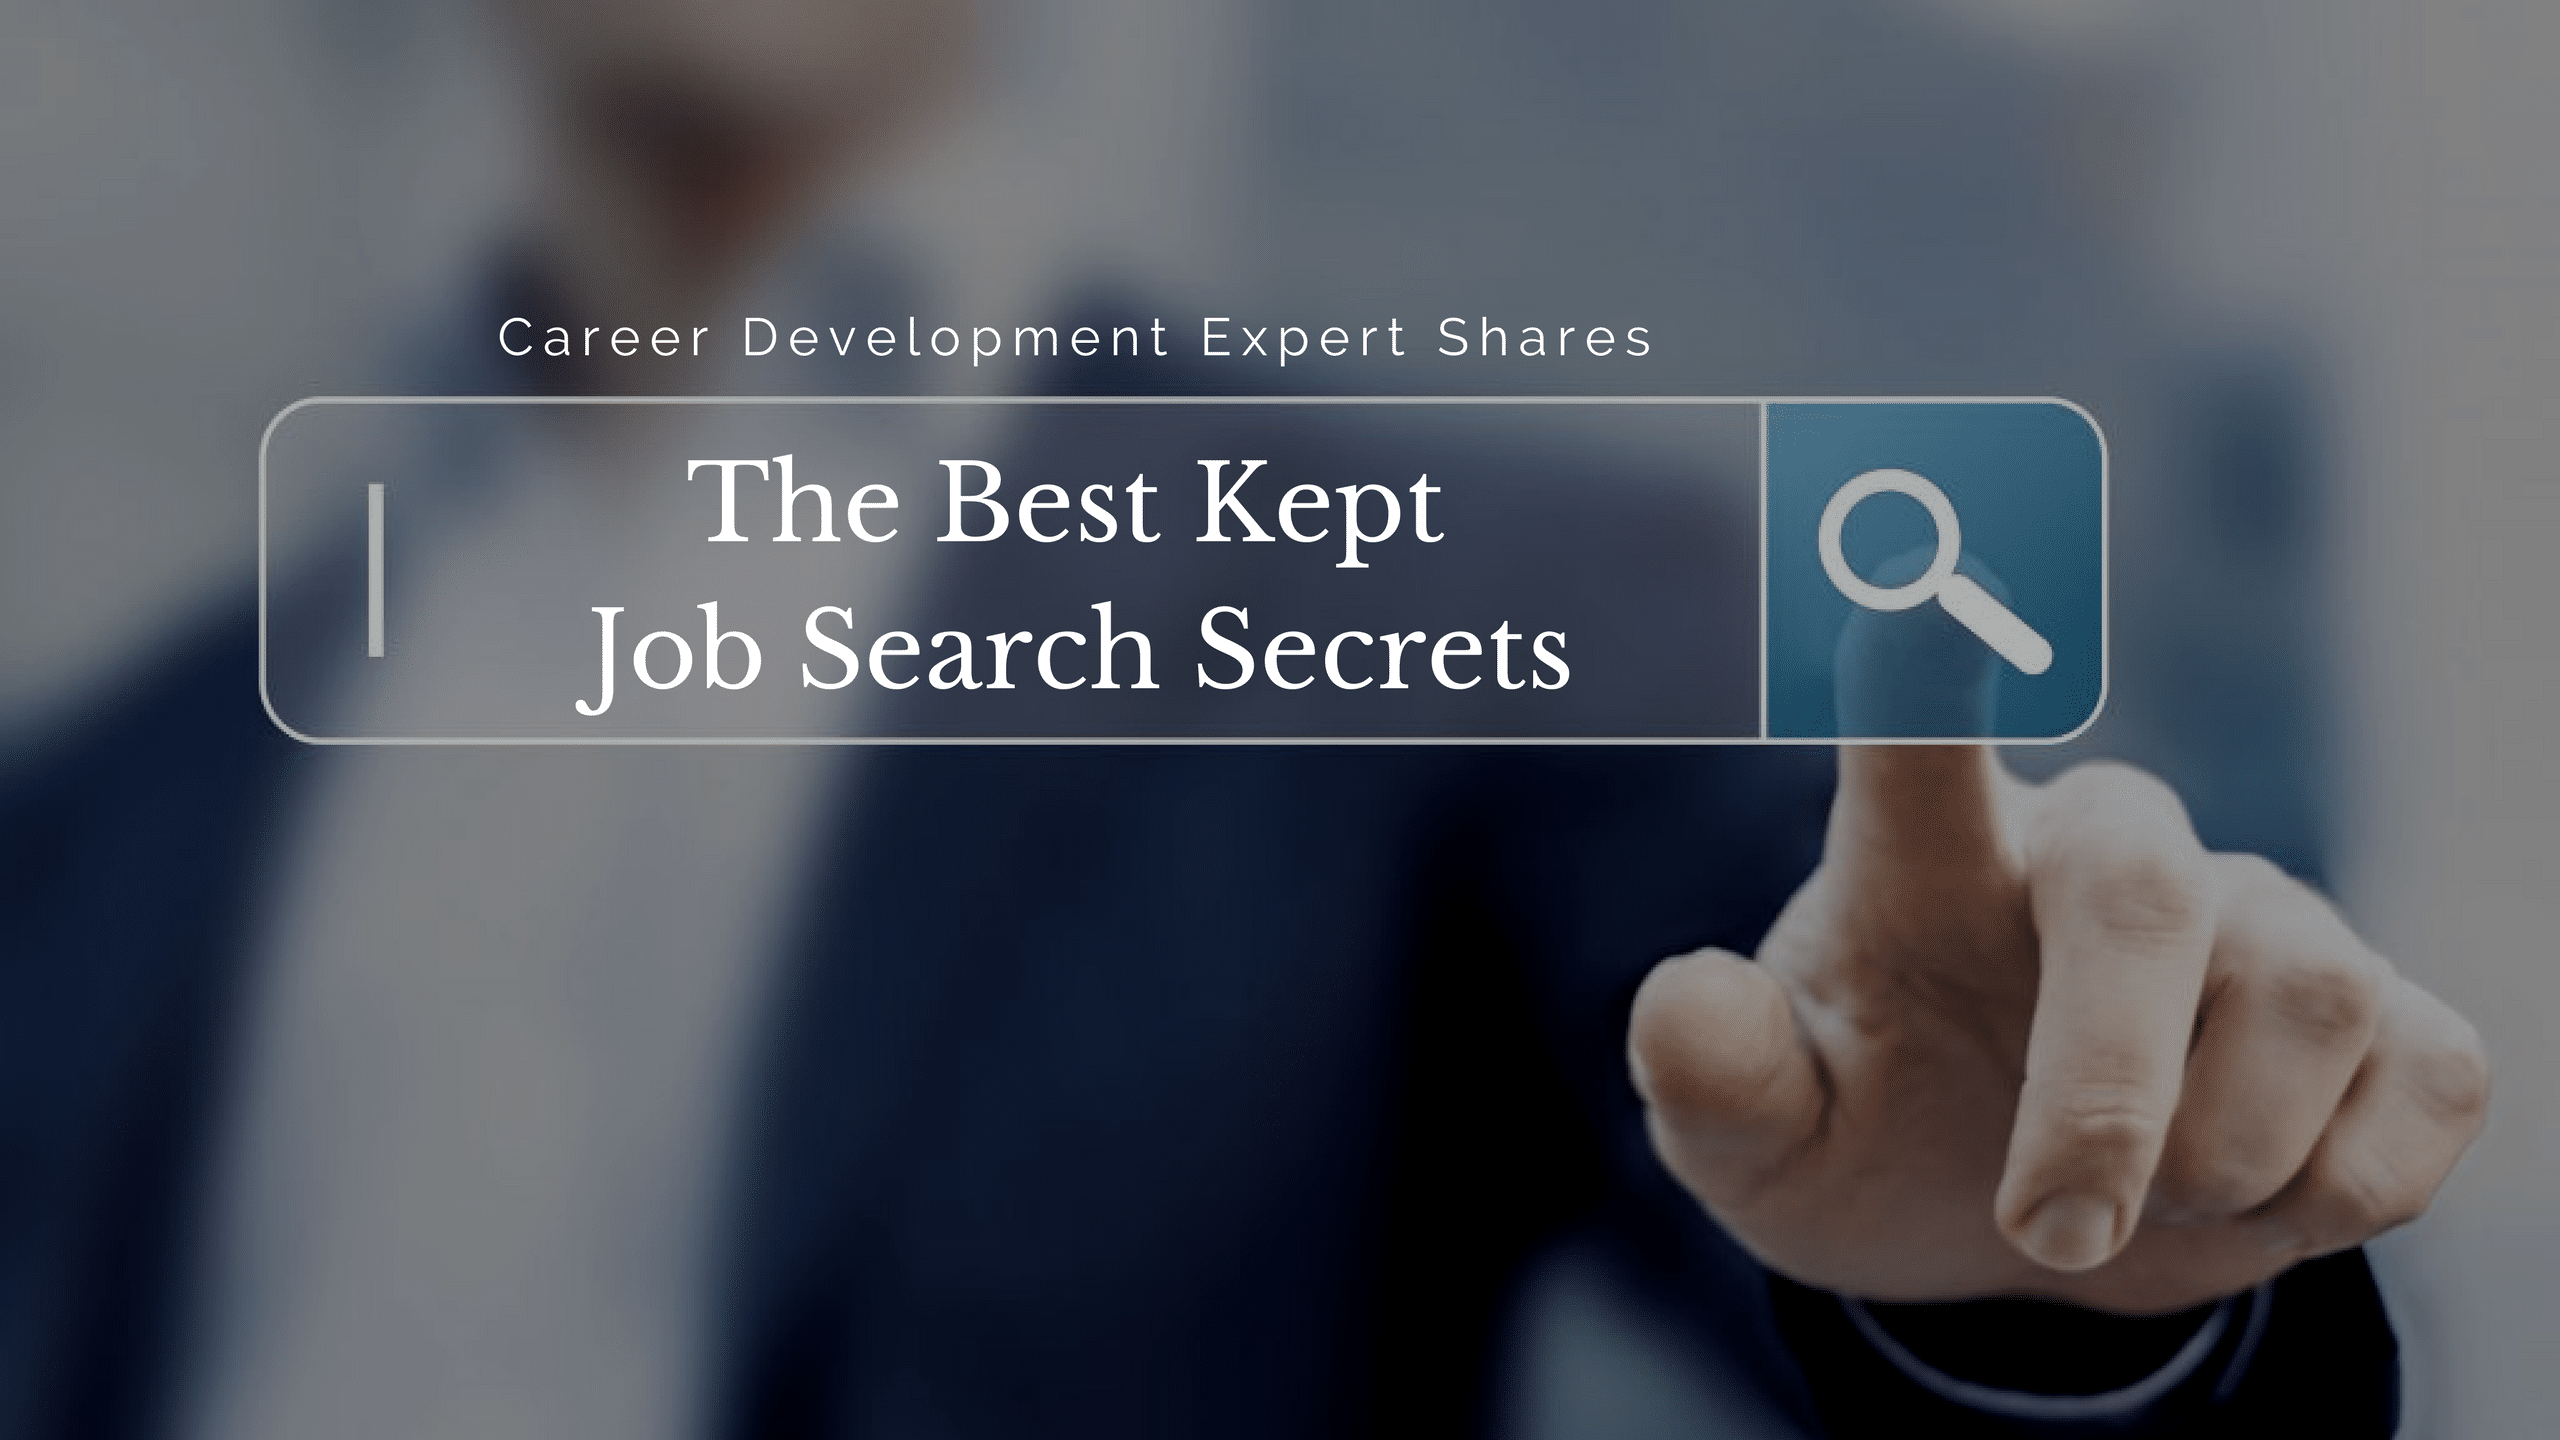 The best kept job search secrets